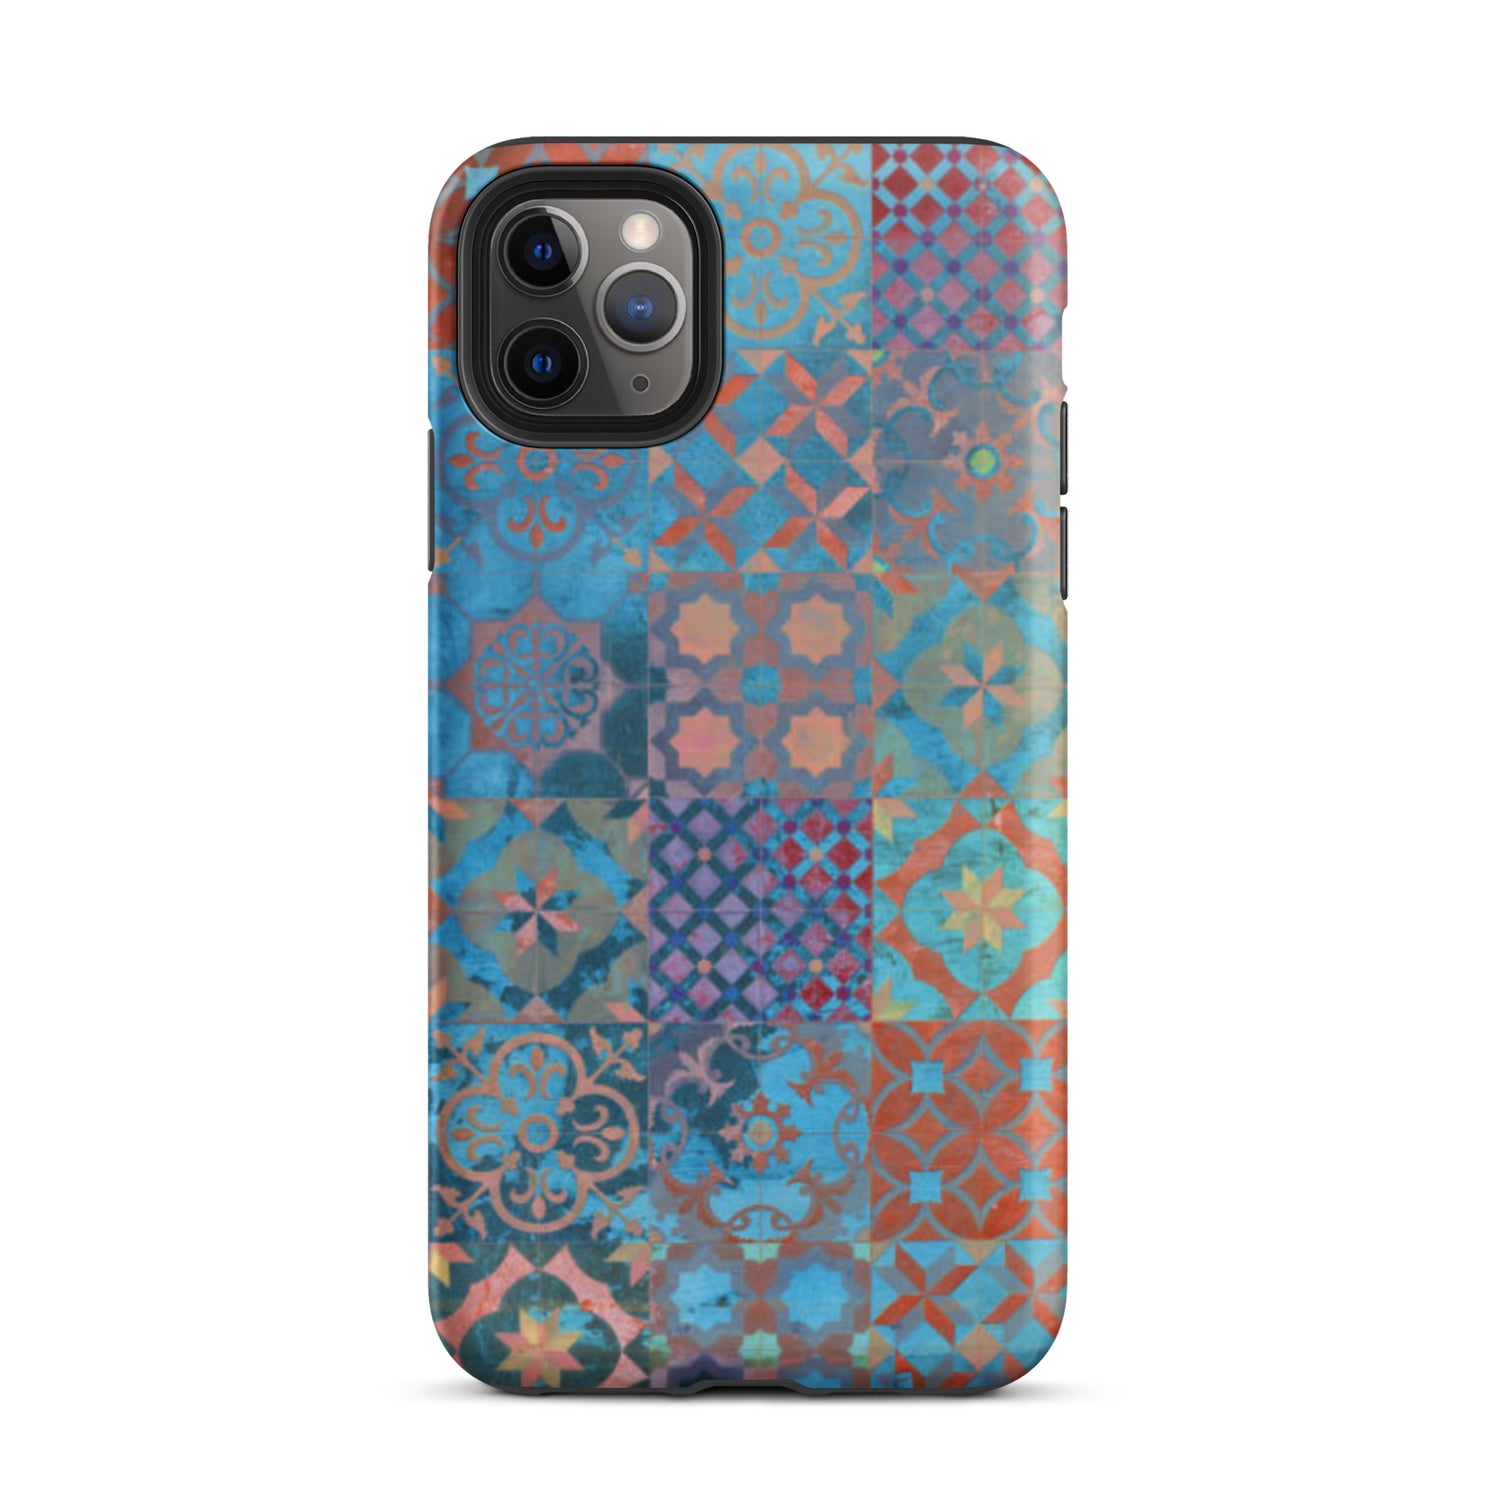 Moroccan Tile Tough iPhone 11 Pro Max case